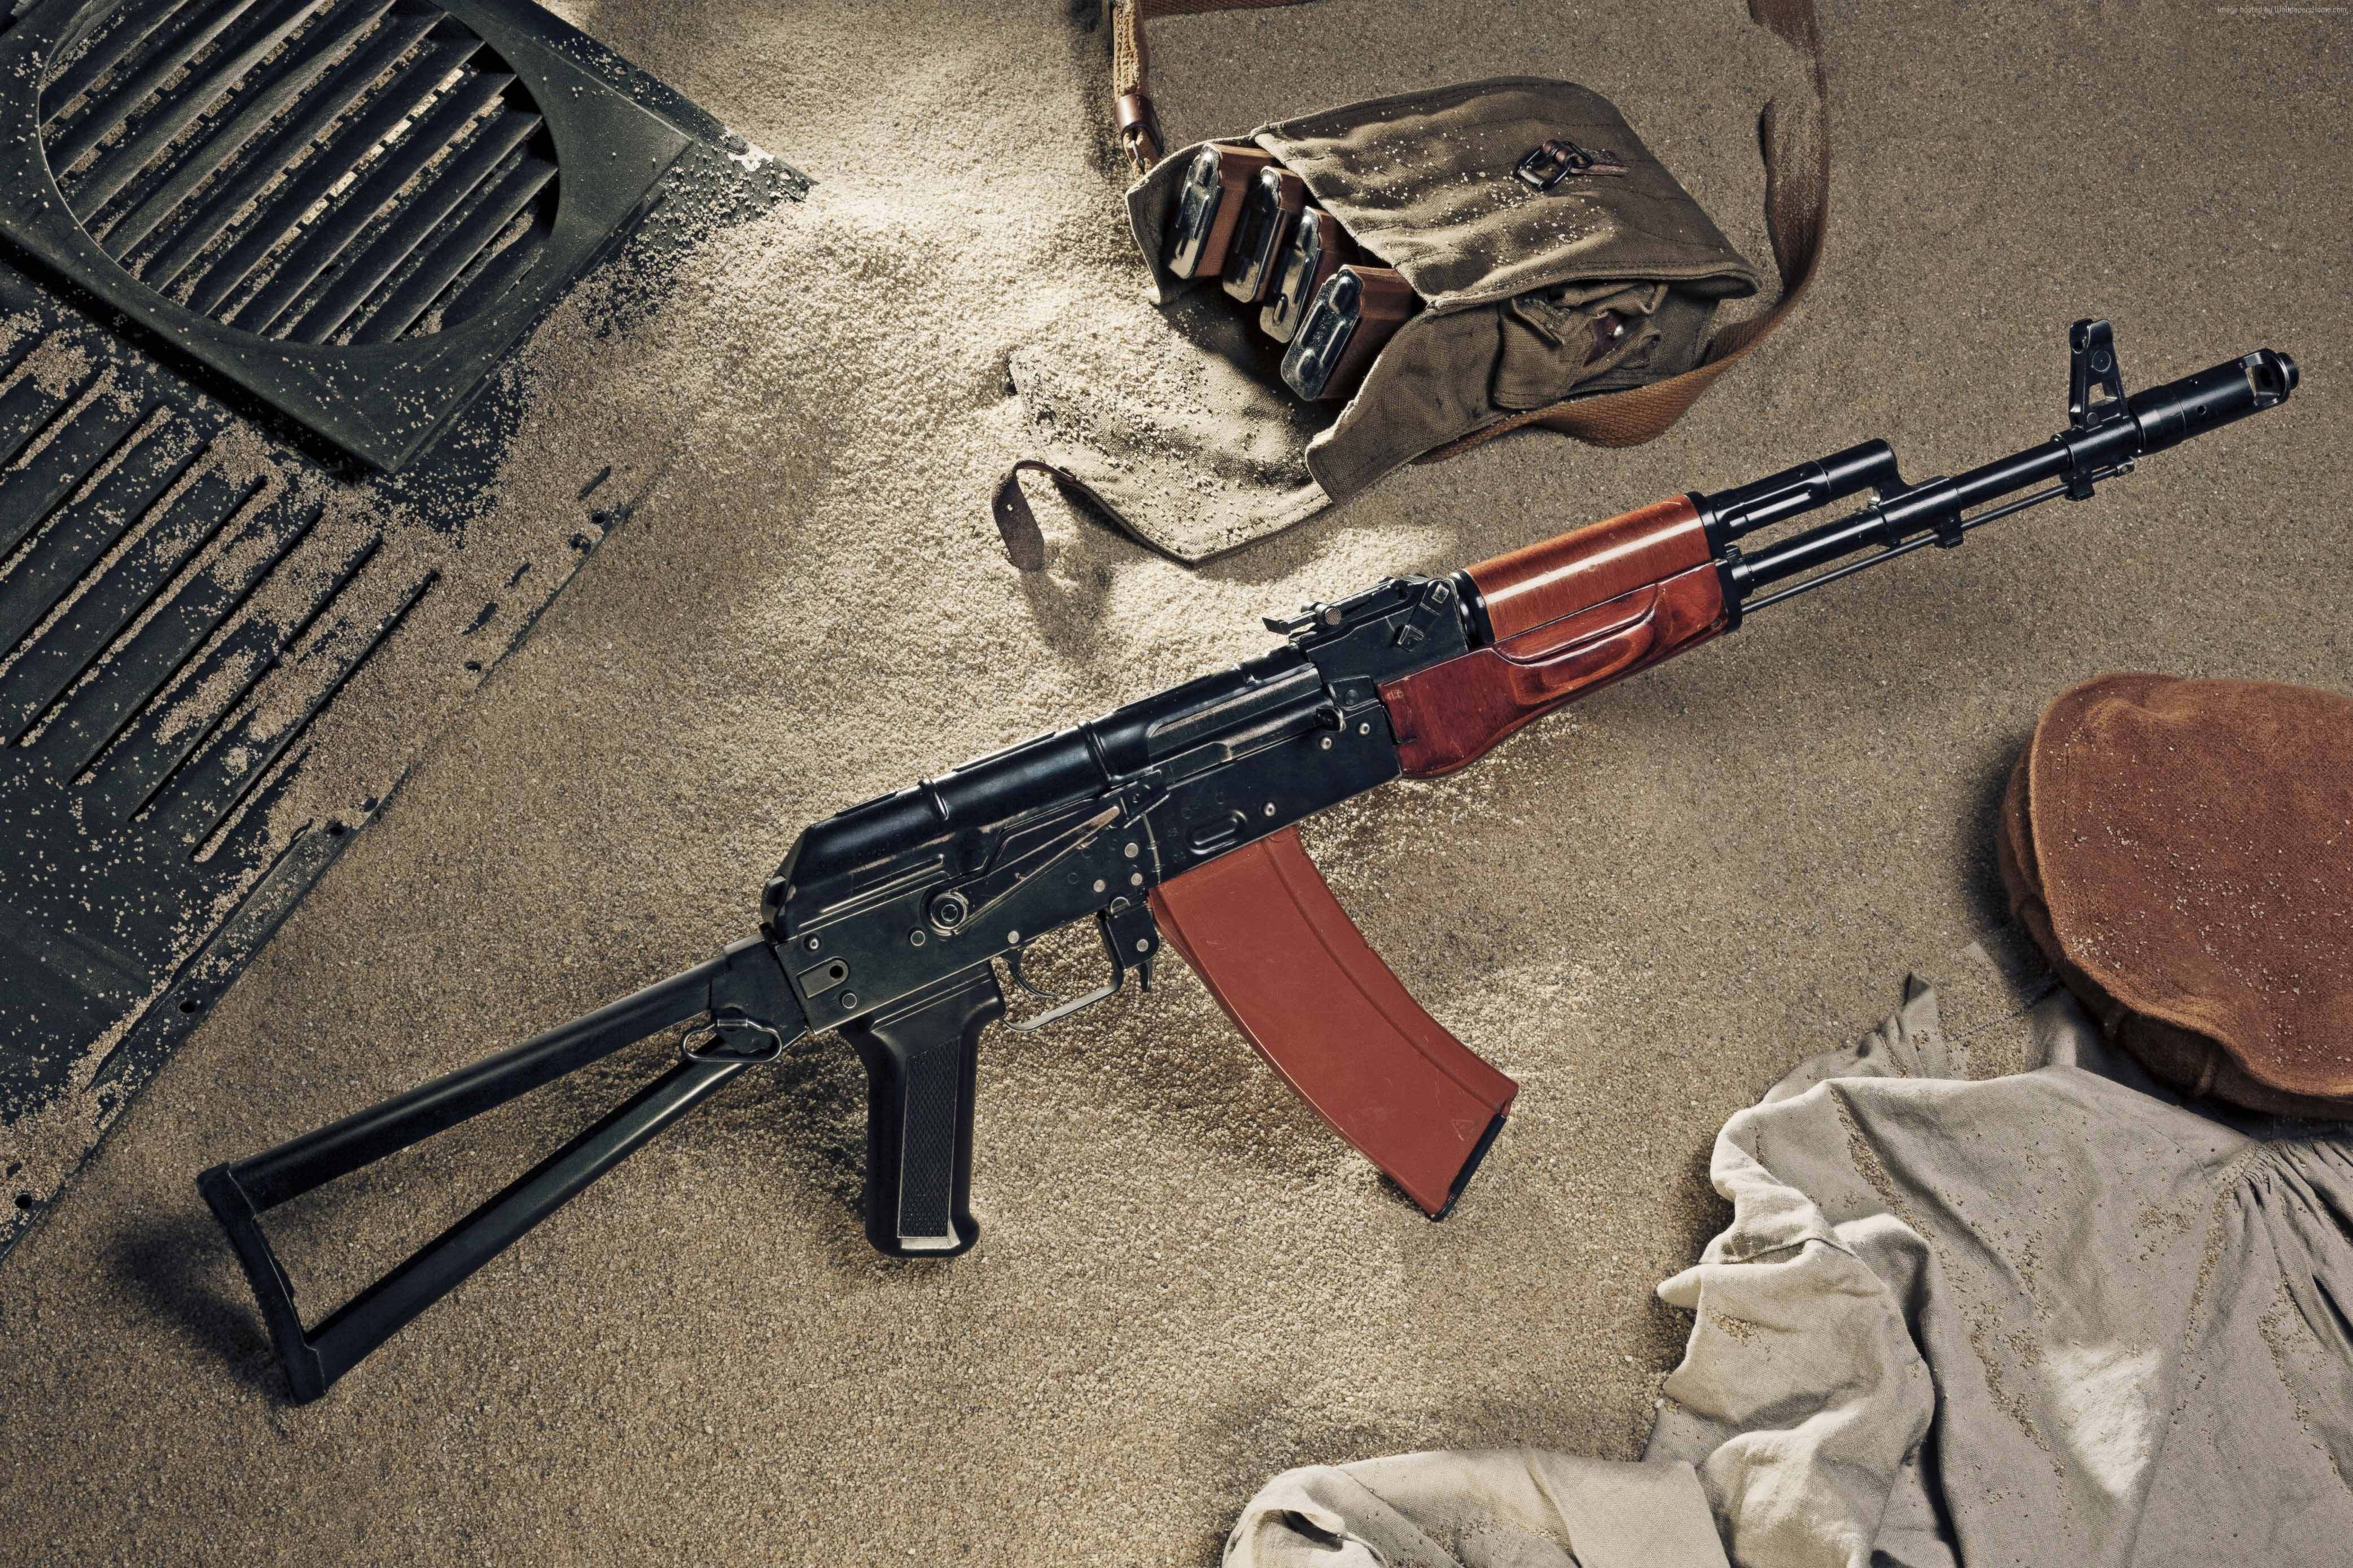 Kalashnikov Wallpaper High Quality